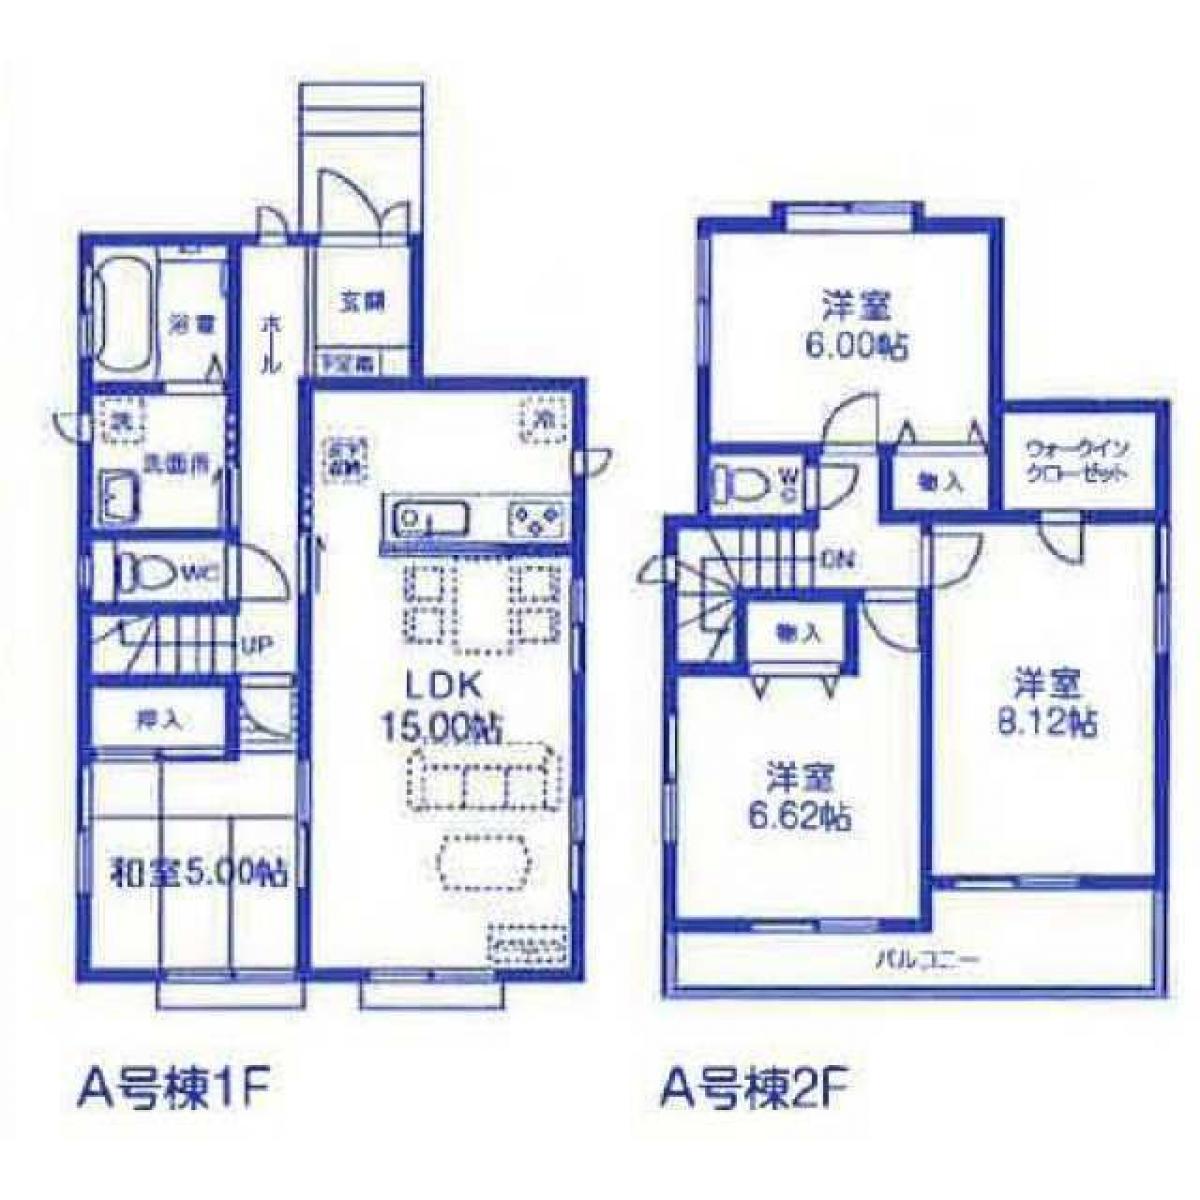 Picture of Home For Sale in Kawaguchi Shi, Saitama, Japan